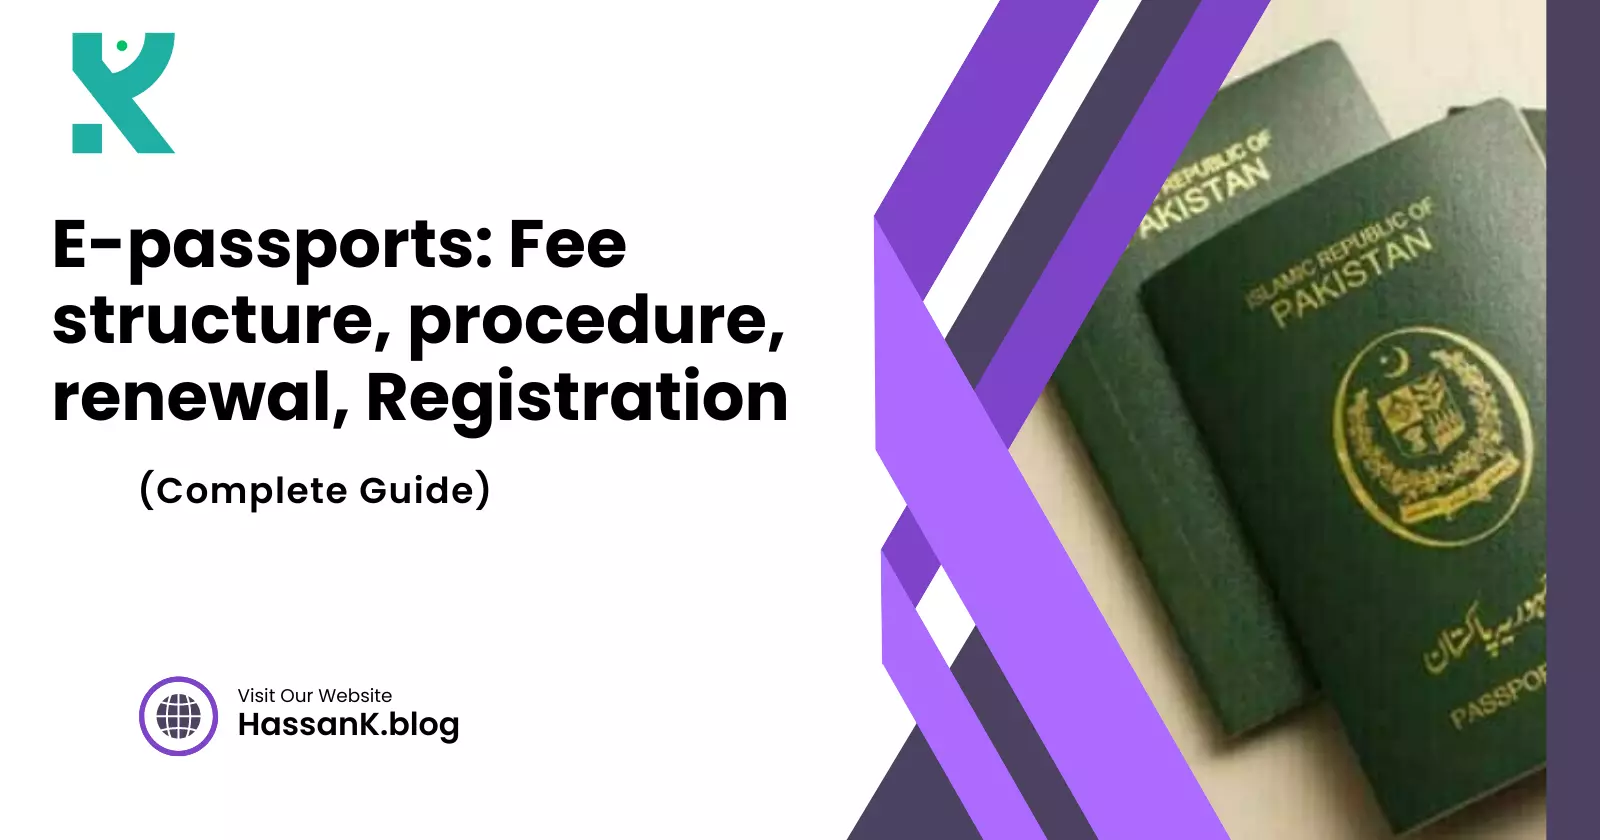 E-passports Fee structure, procedure, renewal, Registration